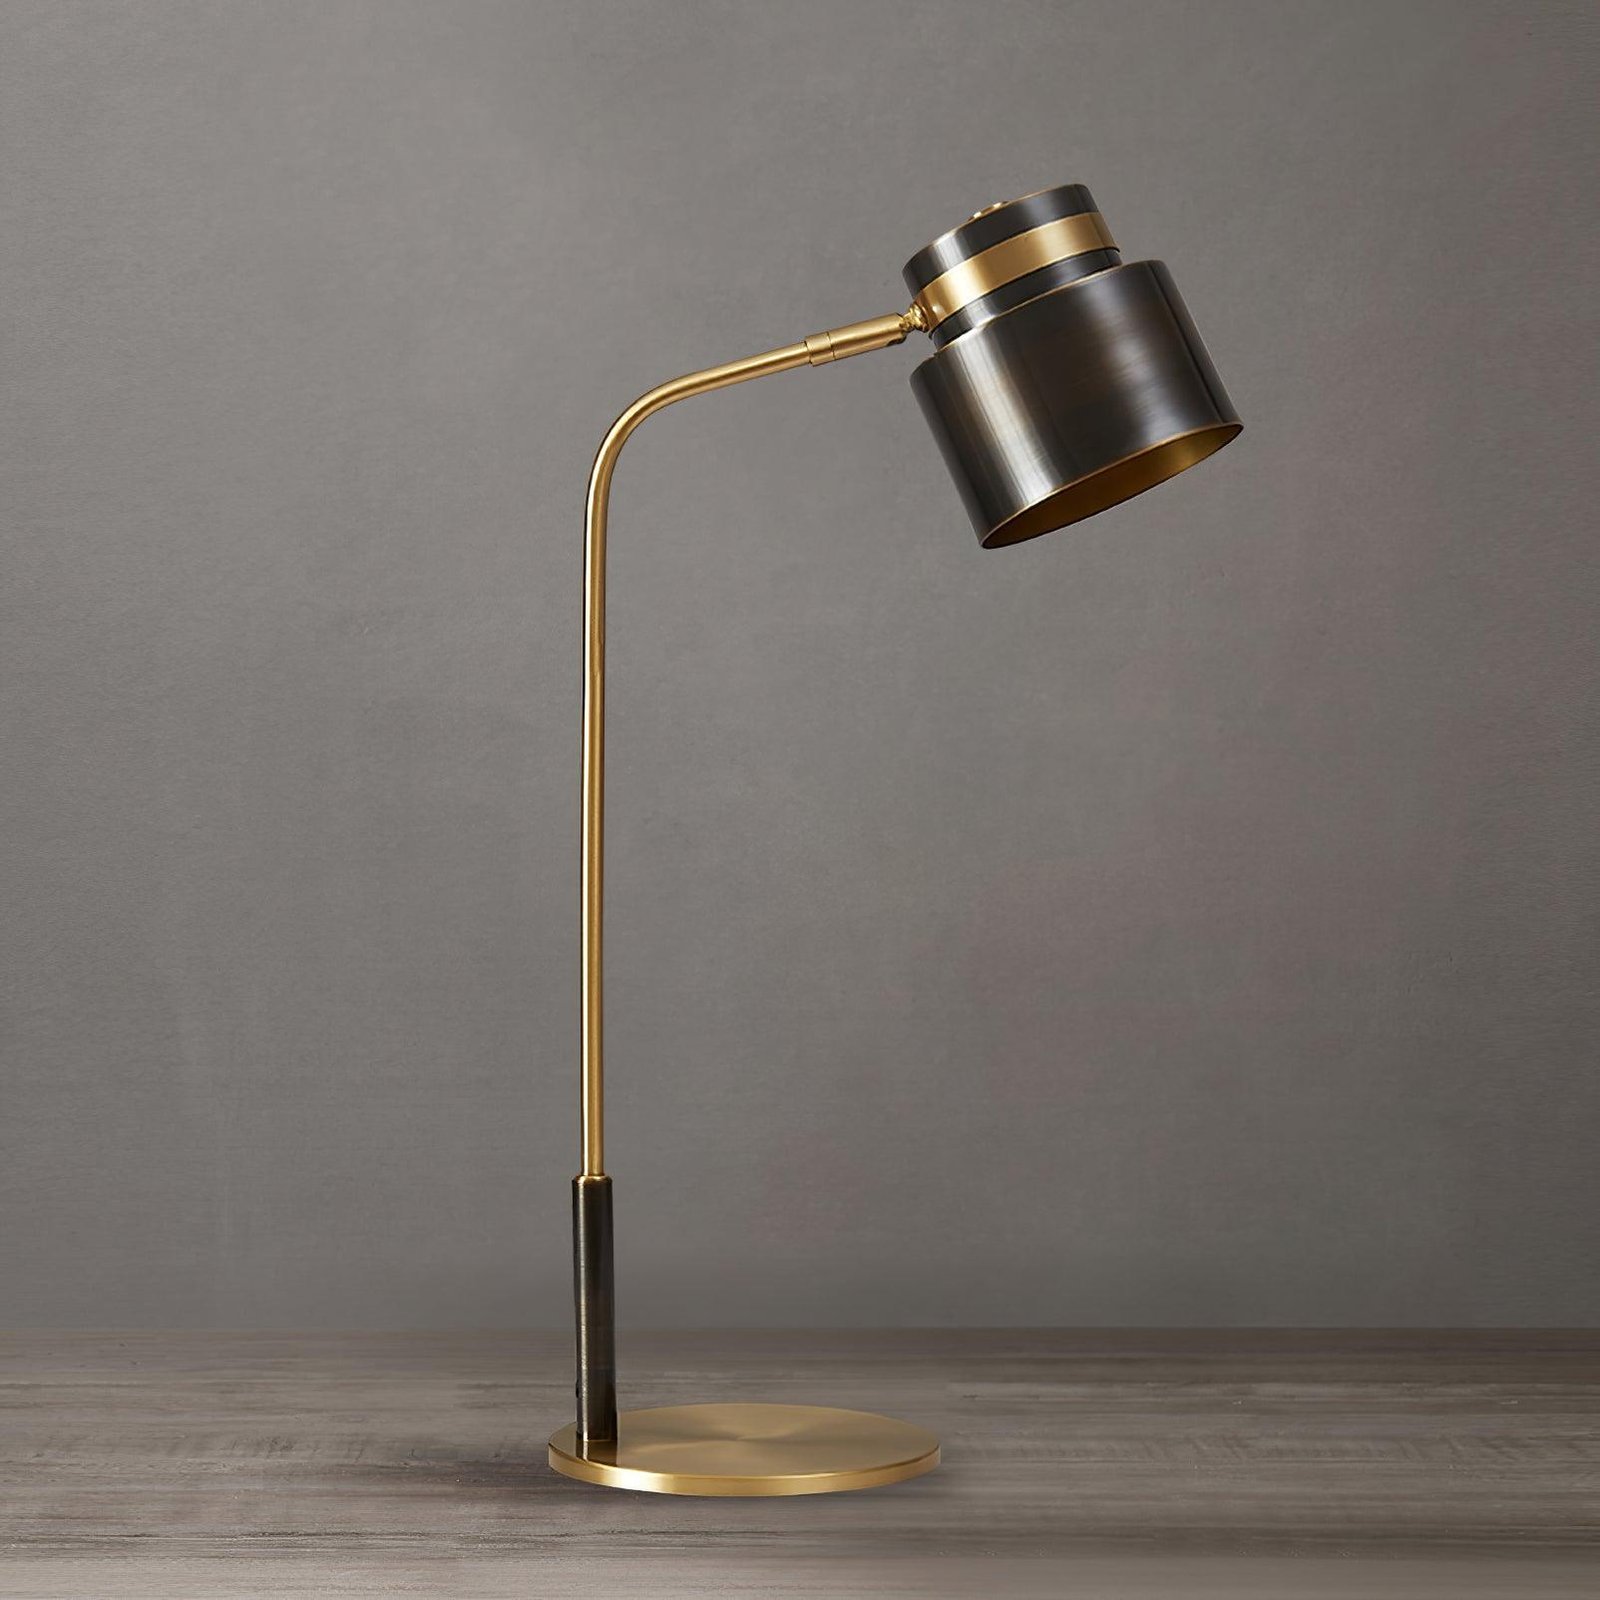 Ari Scandustrial Table Lamp with UK Plug: Dimensions 5.9″ x 11″ x 20.5″ (15cm x 28cm x 52cm), Brass+Black